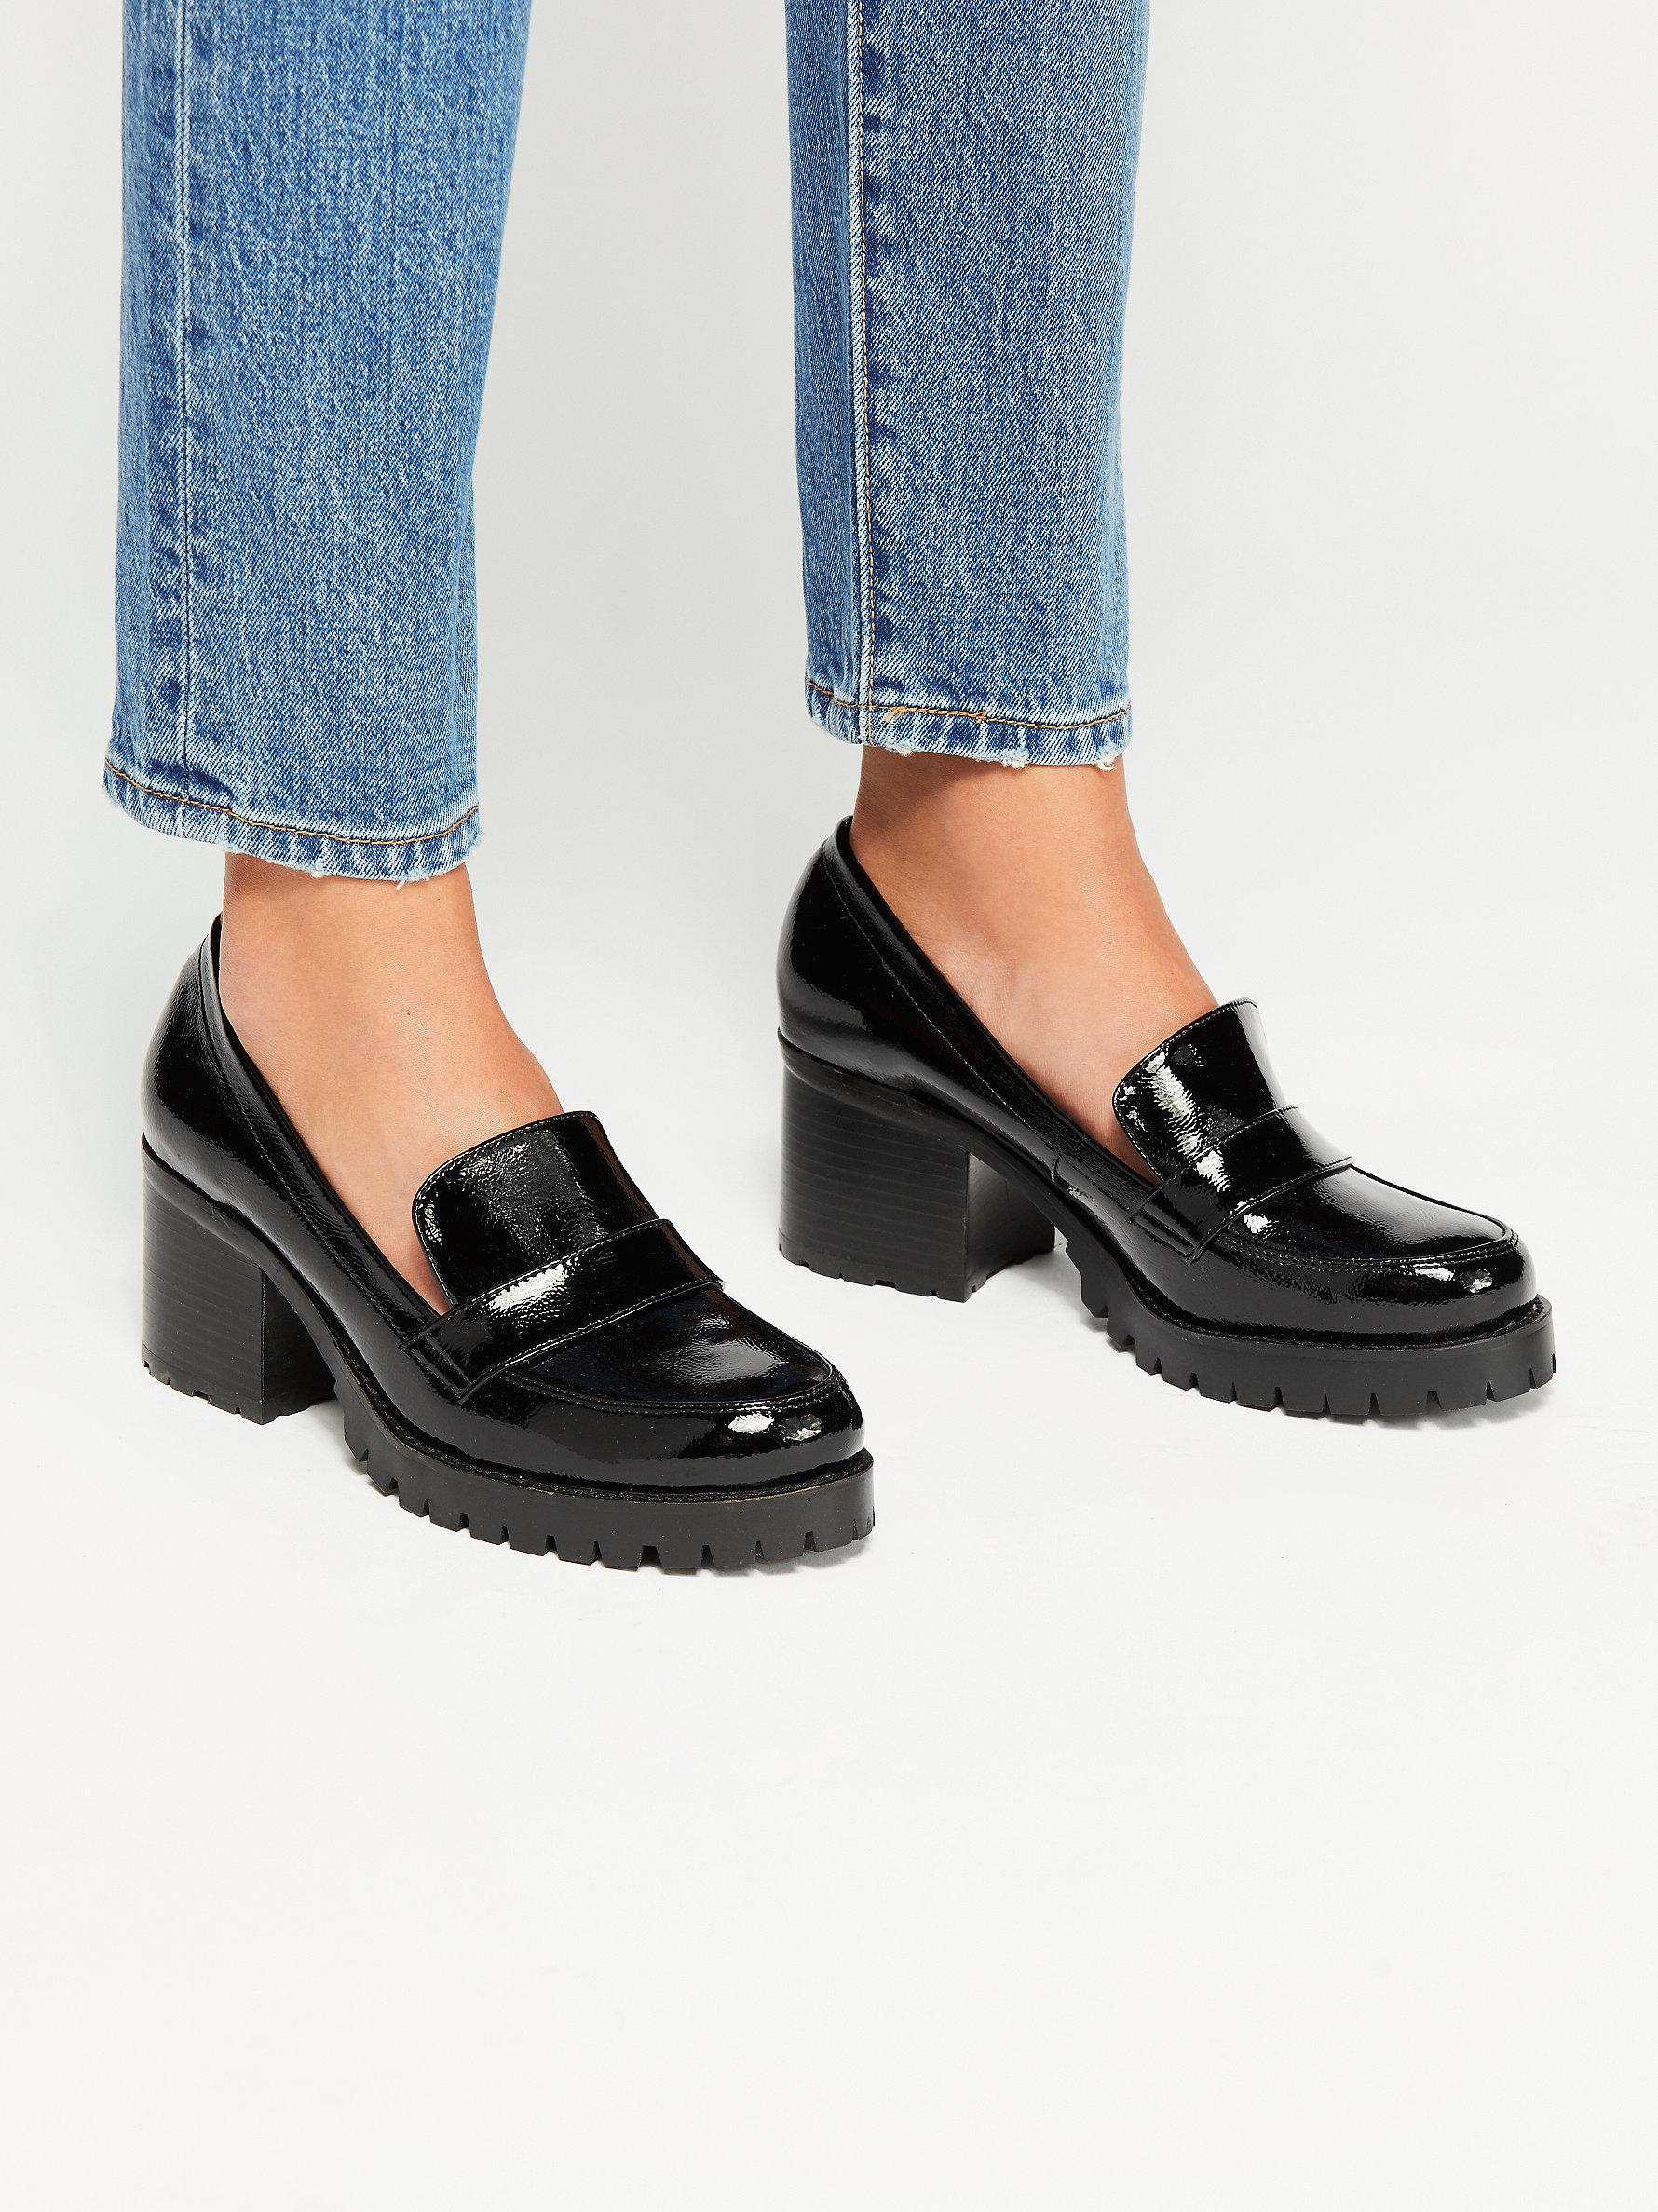 Free People Leather Lexden Block Heel Loafer By Jane & The Shoe in Black |  Lyst Australia